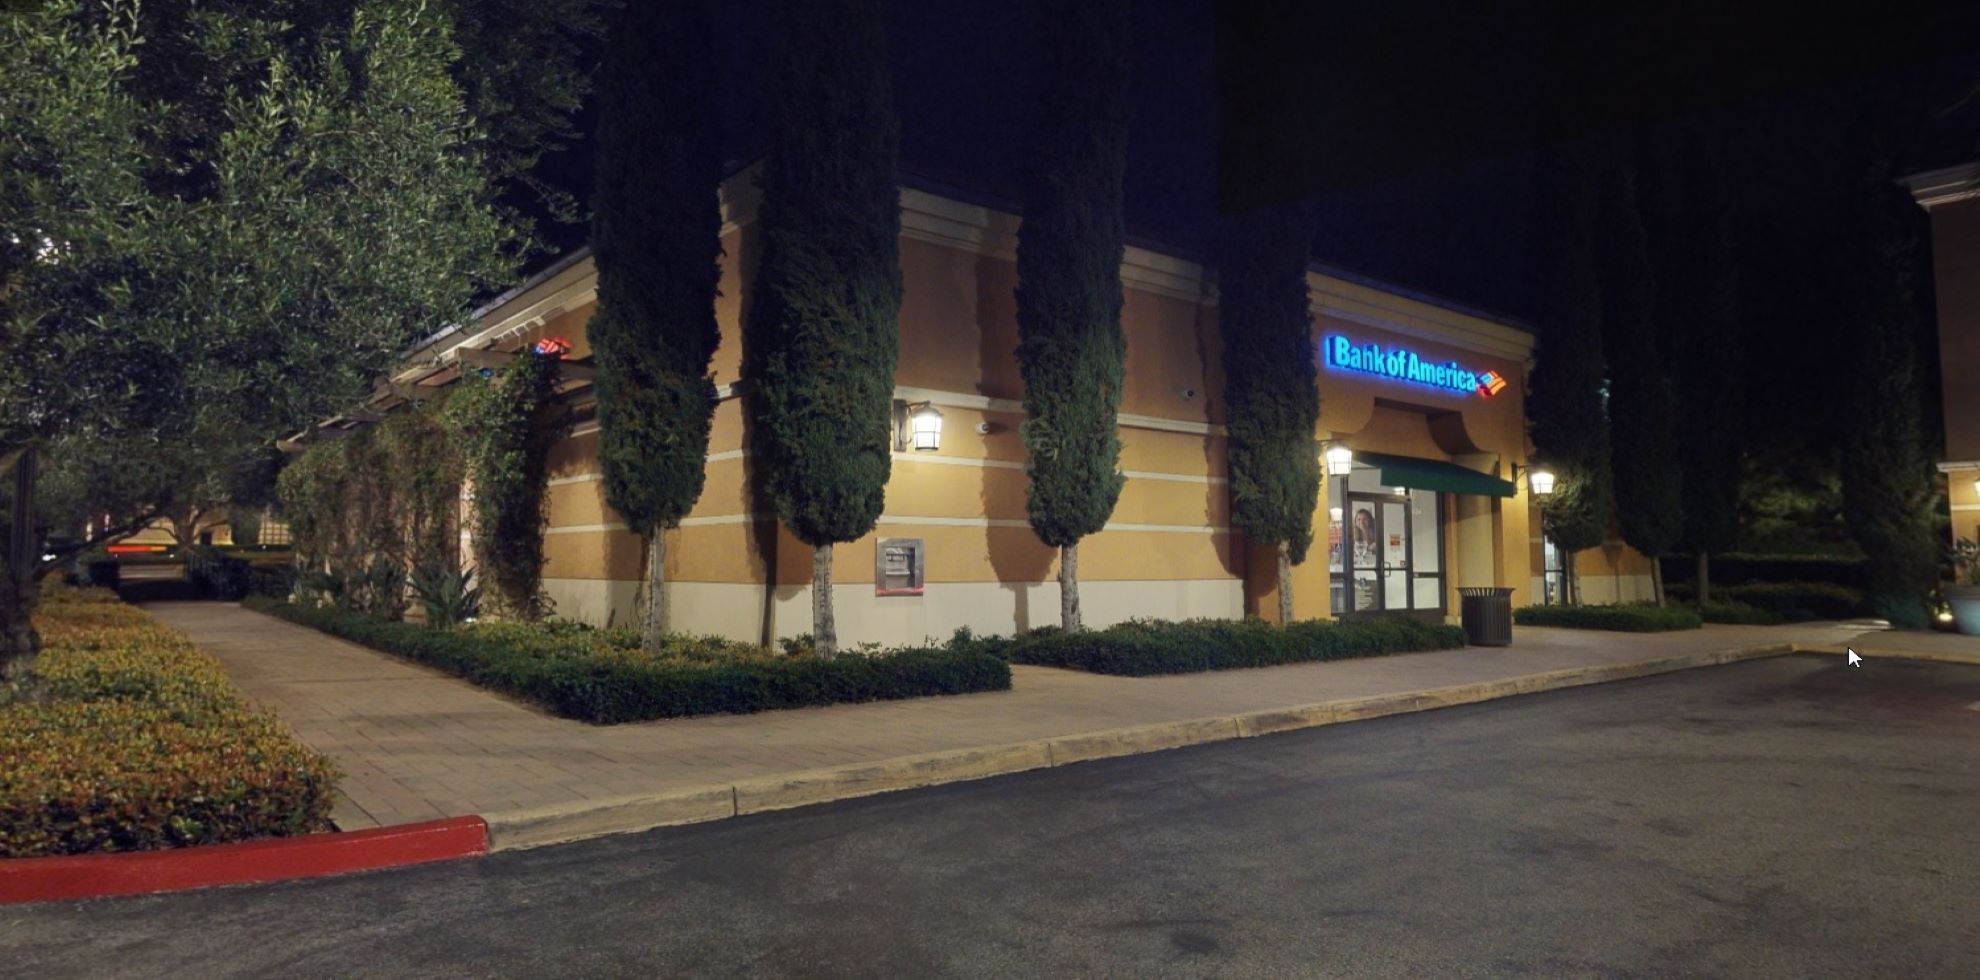 Bank of America financial center with walk-up ATM | 6356 Irvine Blvd, Irvine, CA 92620